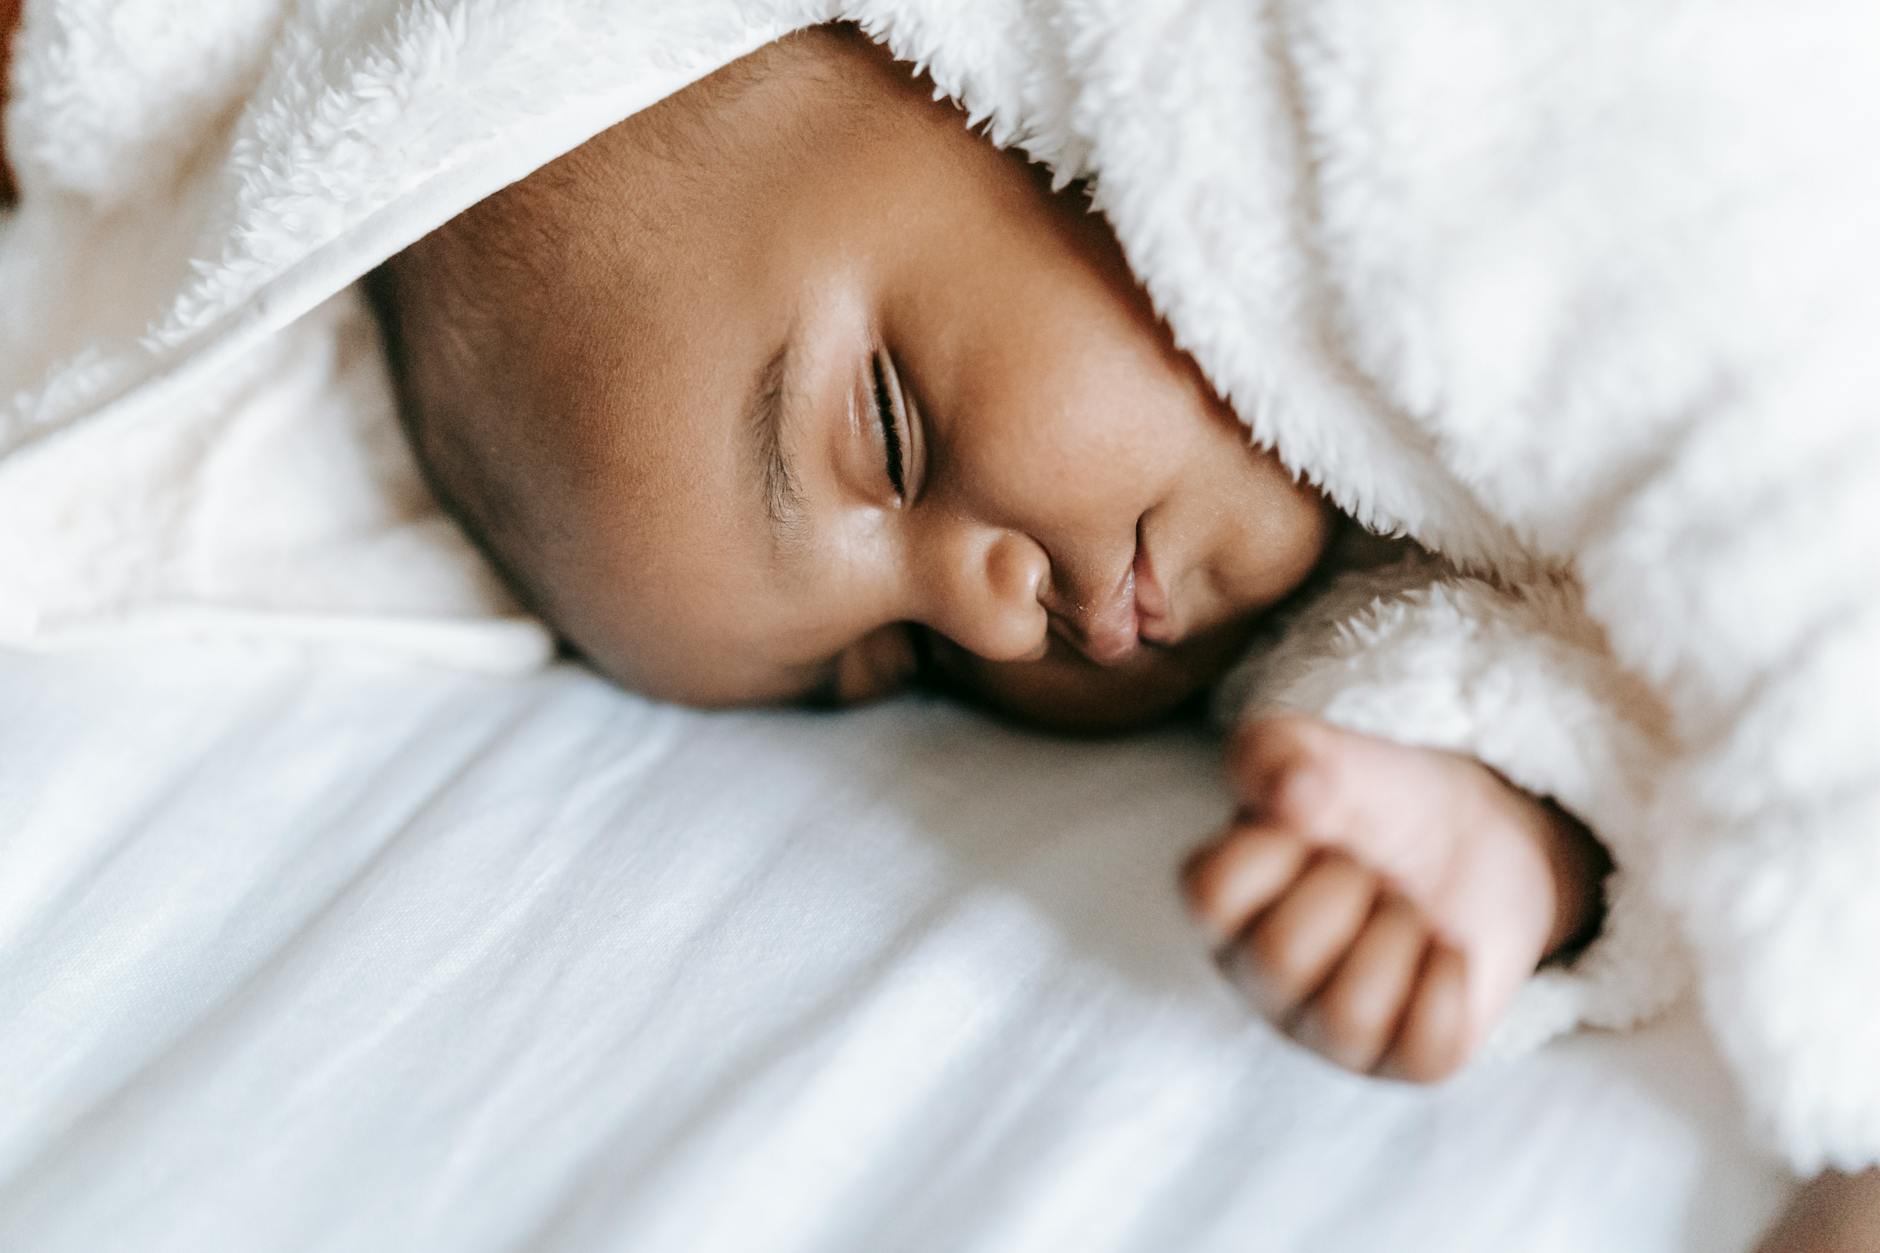 Sleeping Newborn Black Baby Lying On Bed · Free Stock Photo